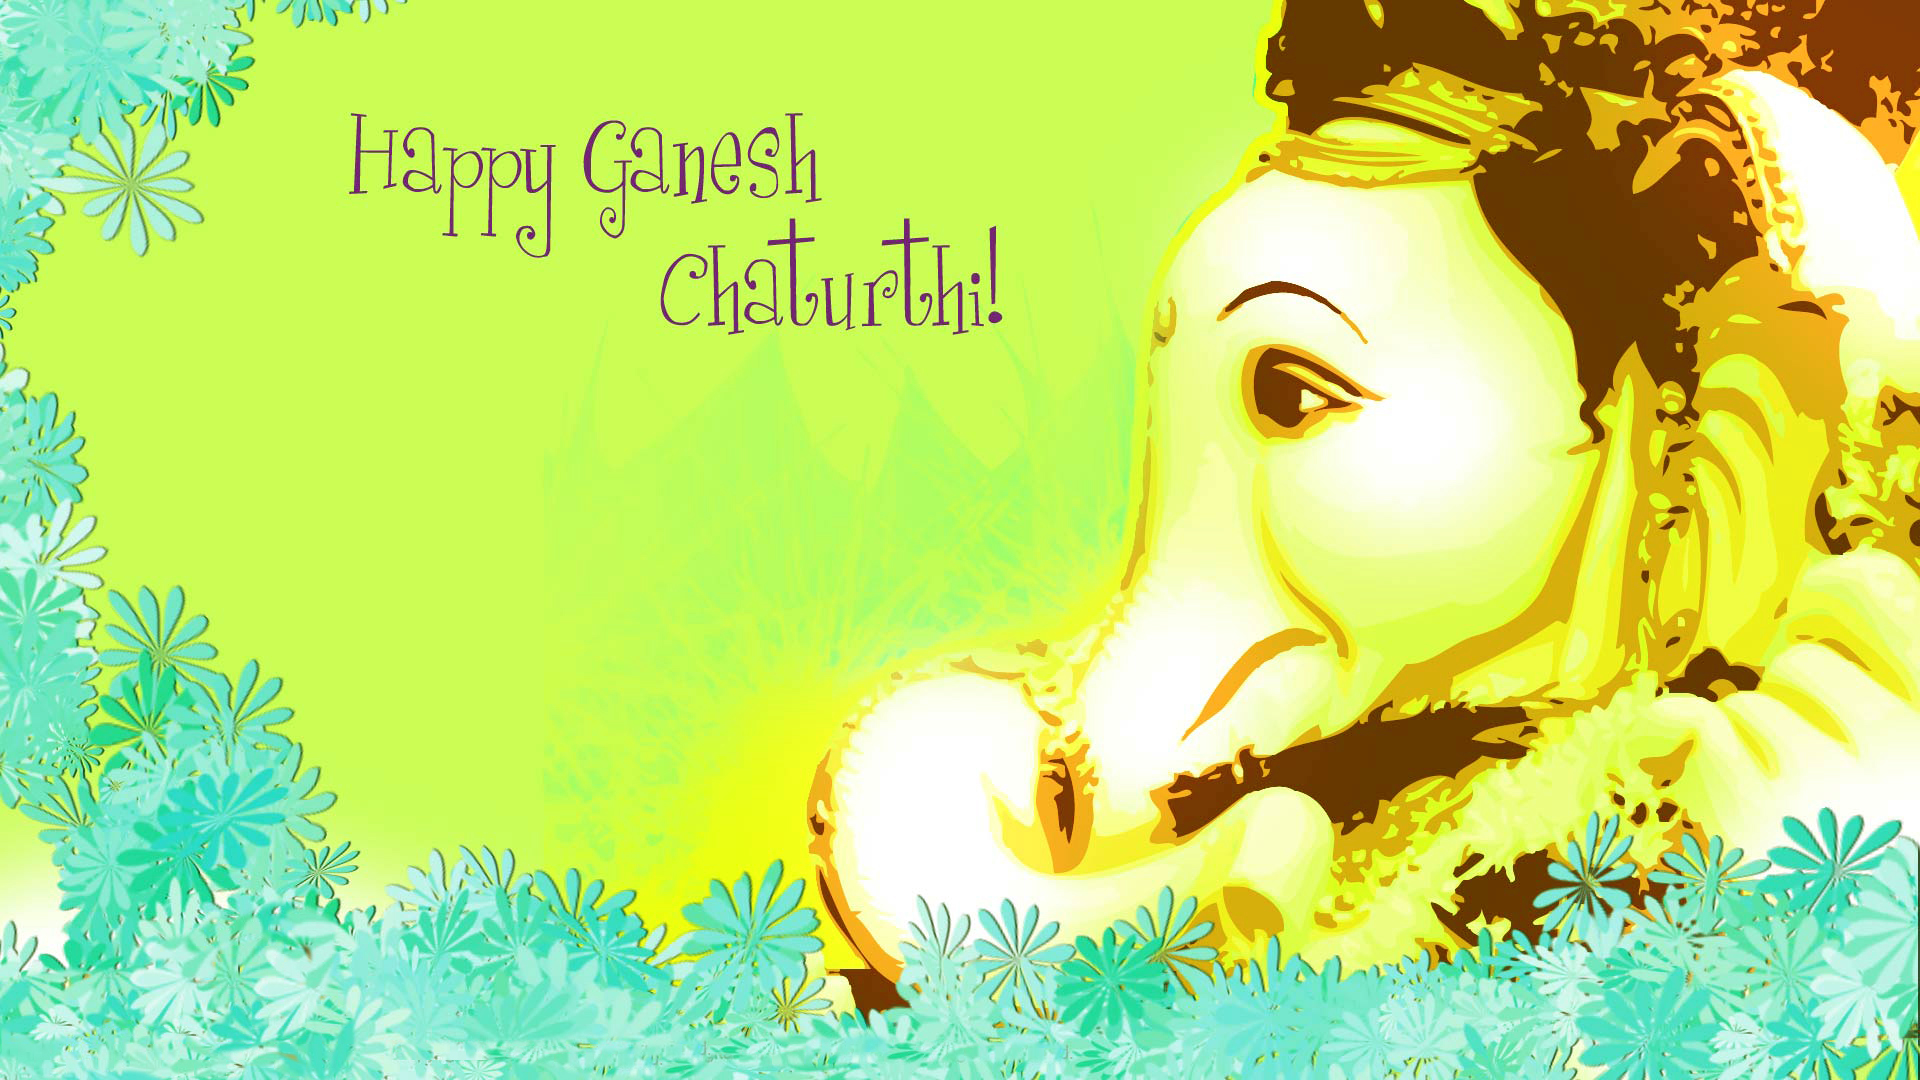 Ganesh Chaturthi HD Images & Wallpapers Free Download